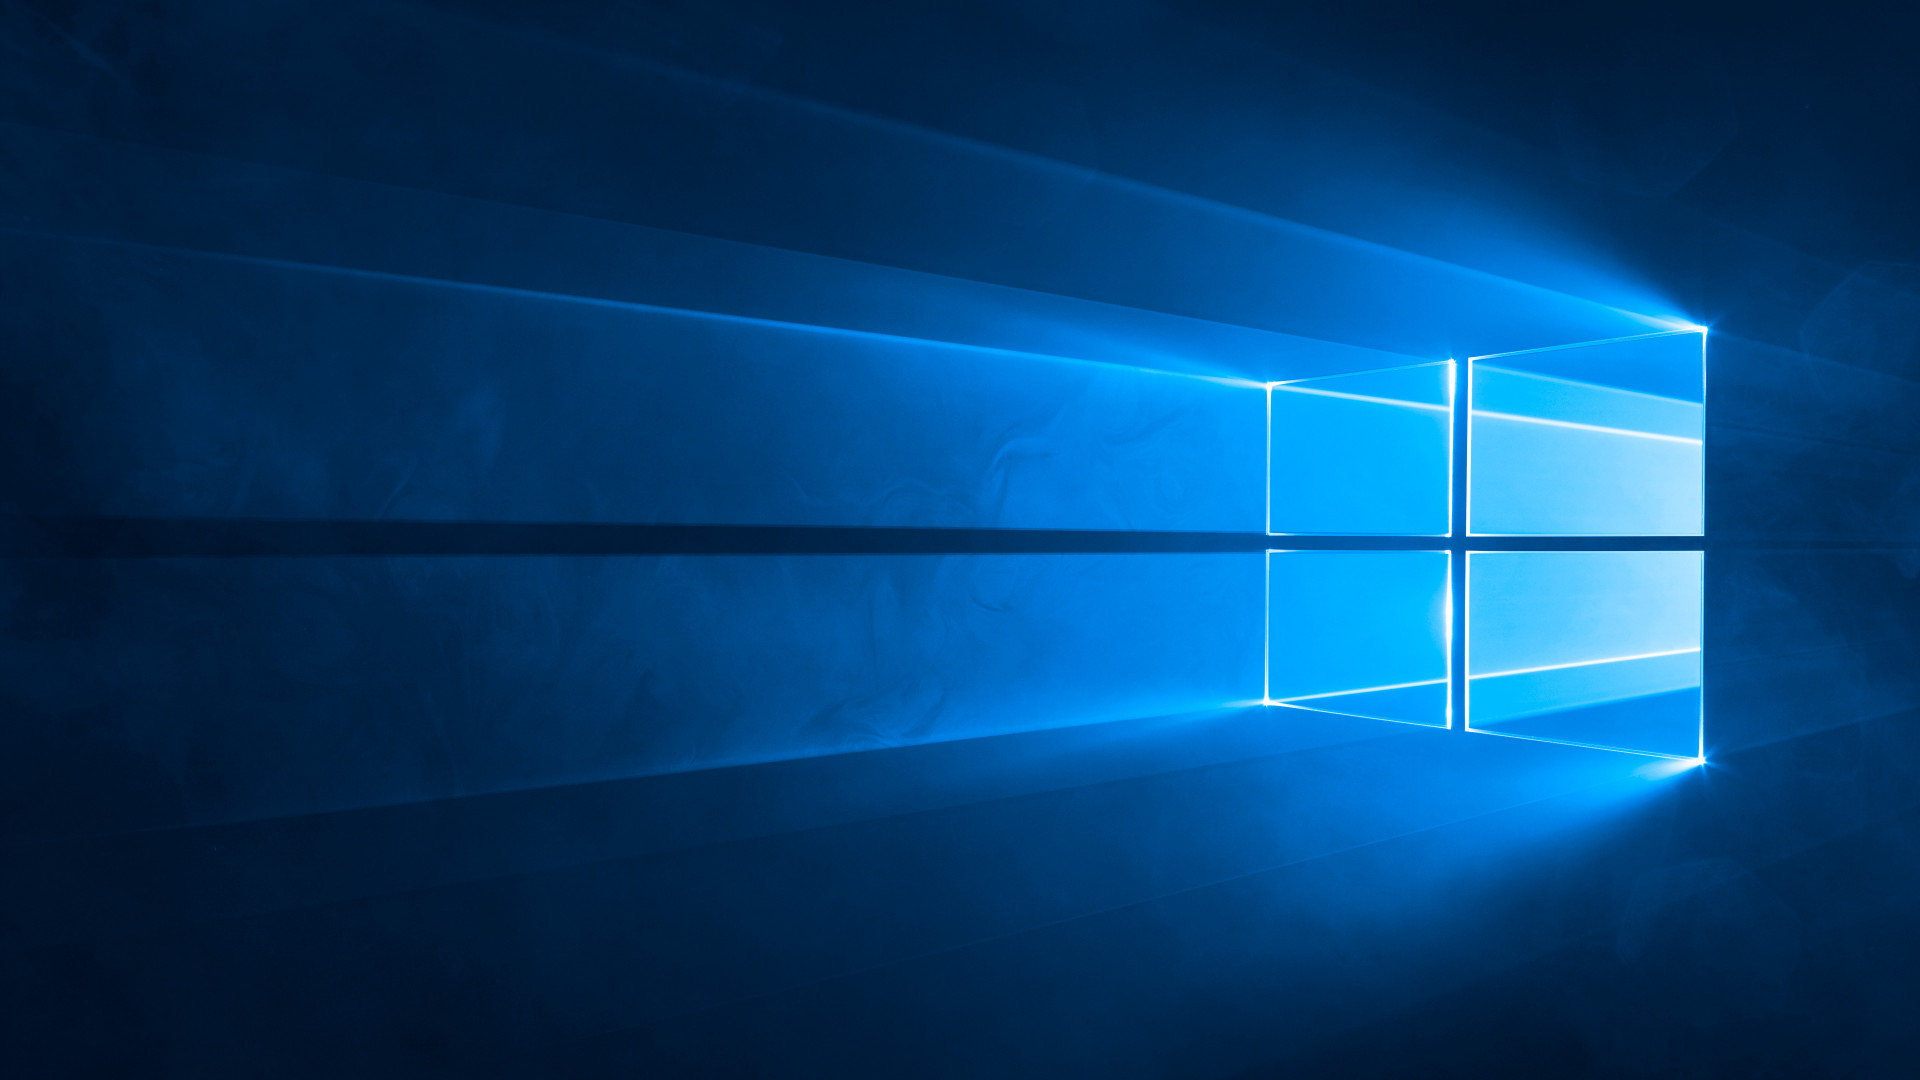 Wallpaper Windows 10, 4k, 5k wallpaper, Microsoft, blue